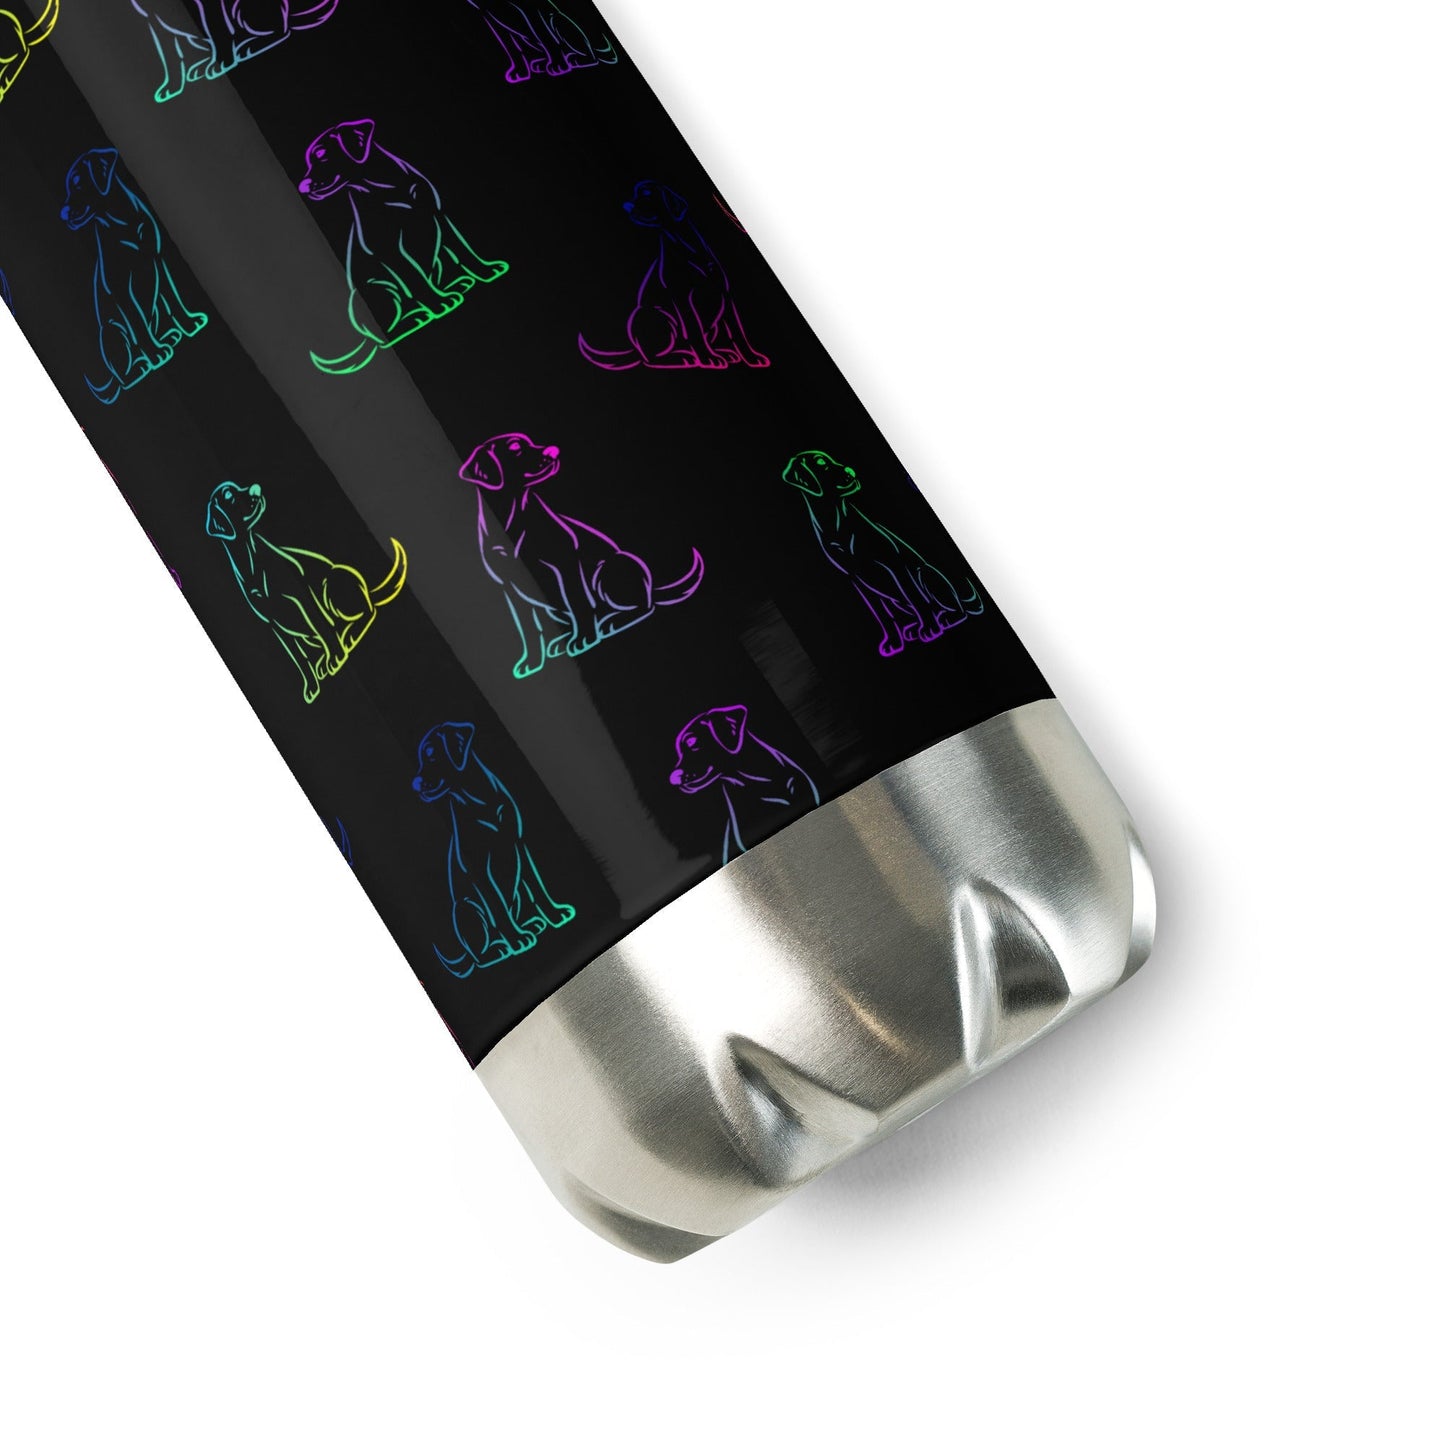 Black Rainbow Dog Stainless Steel Water Bottle - DoggyLoveandMore